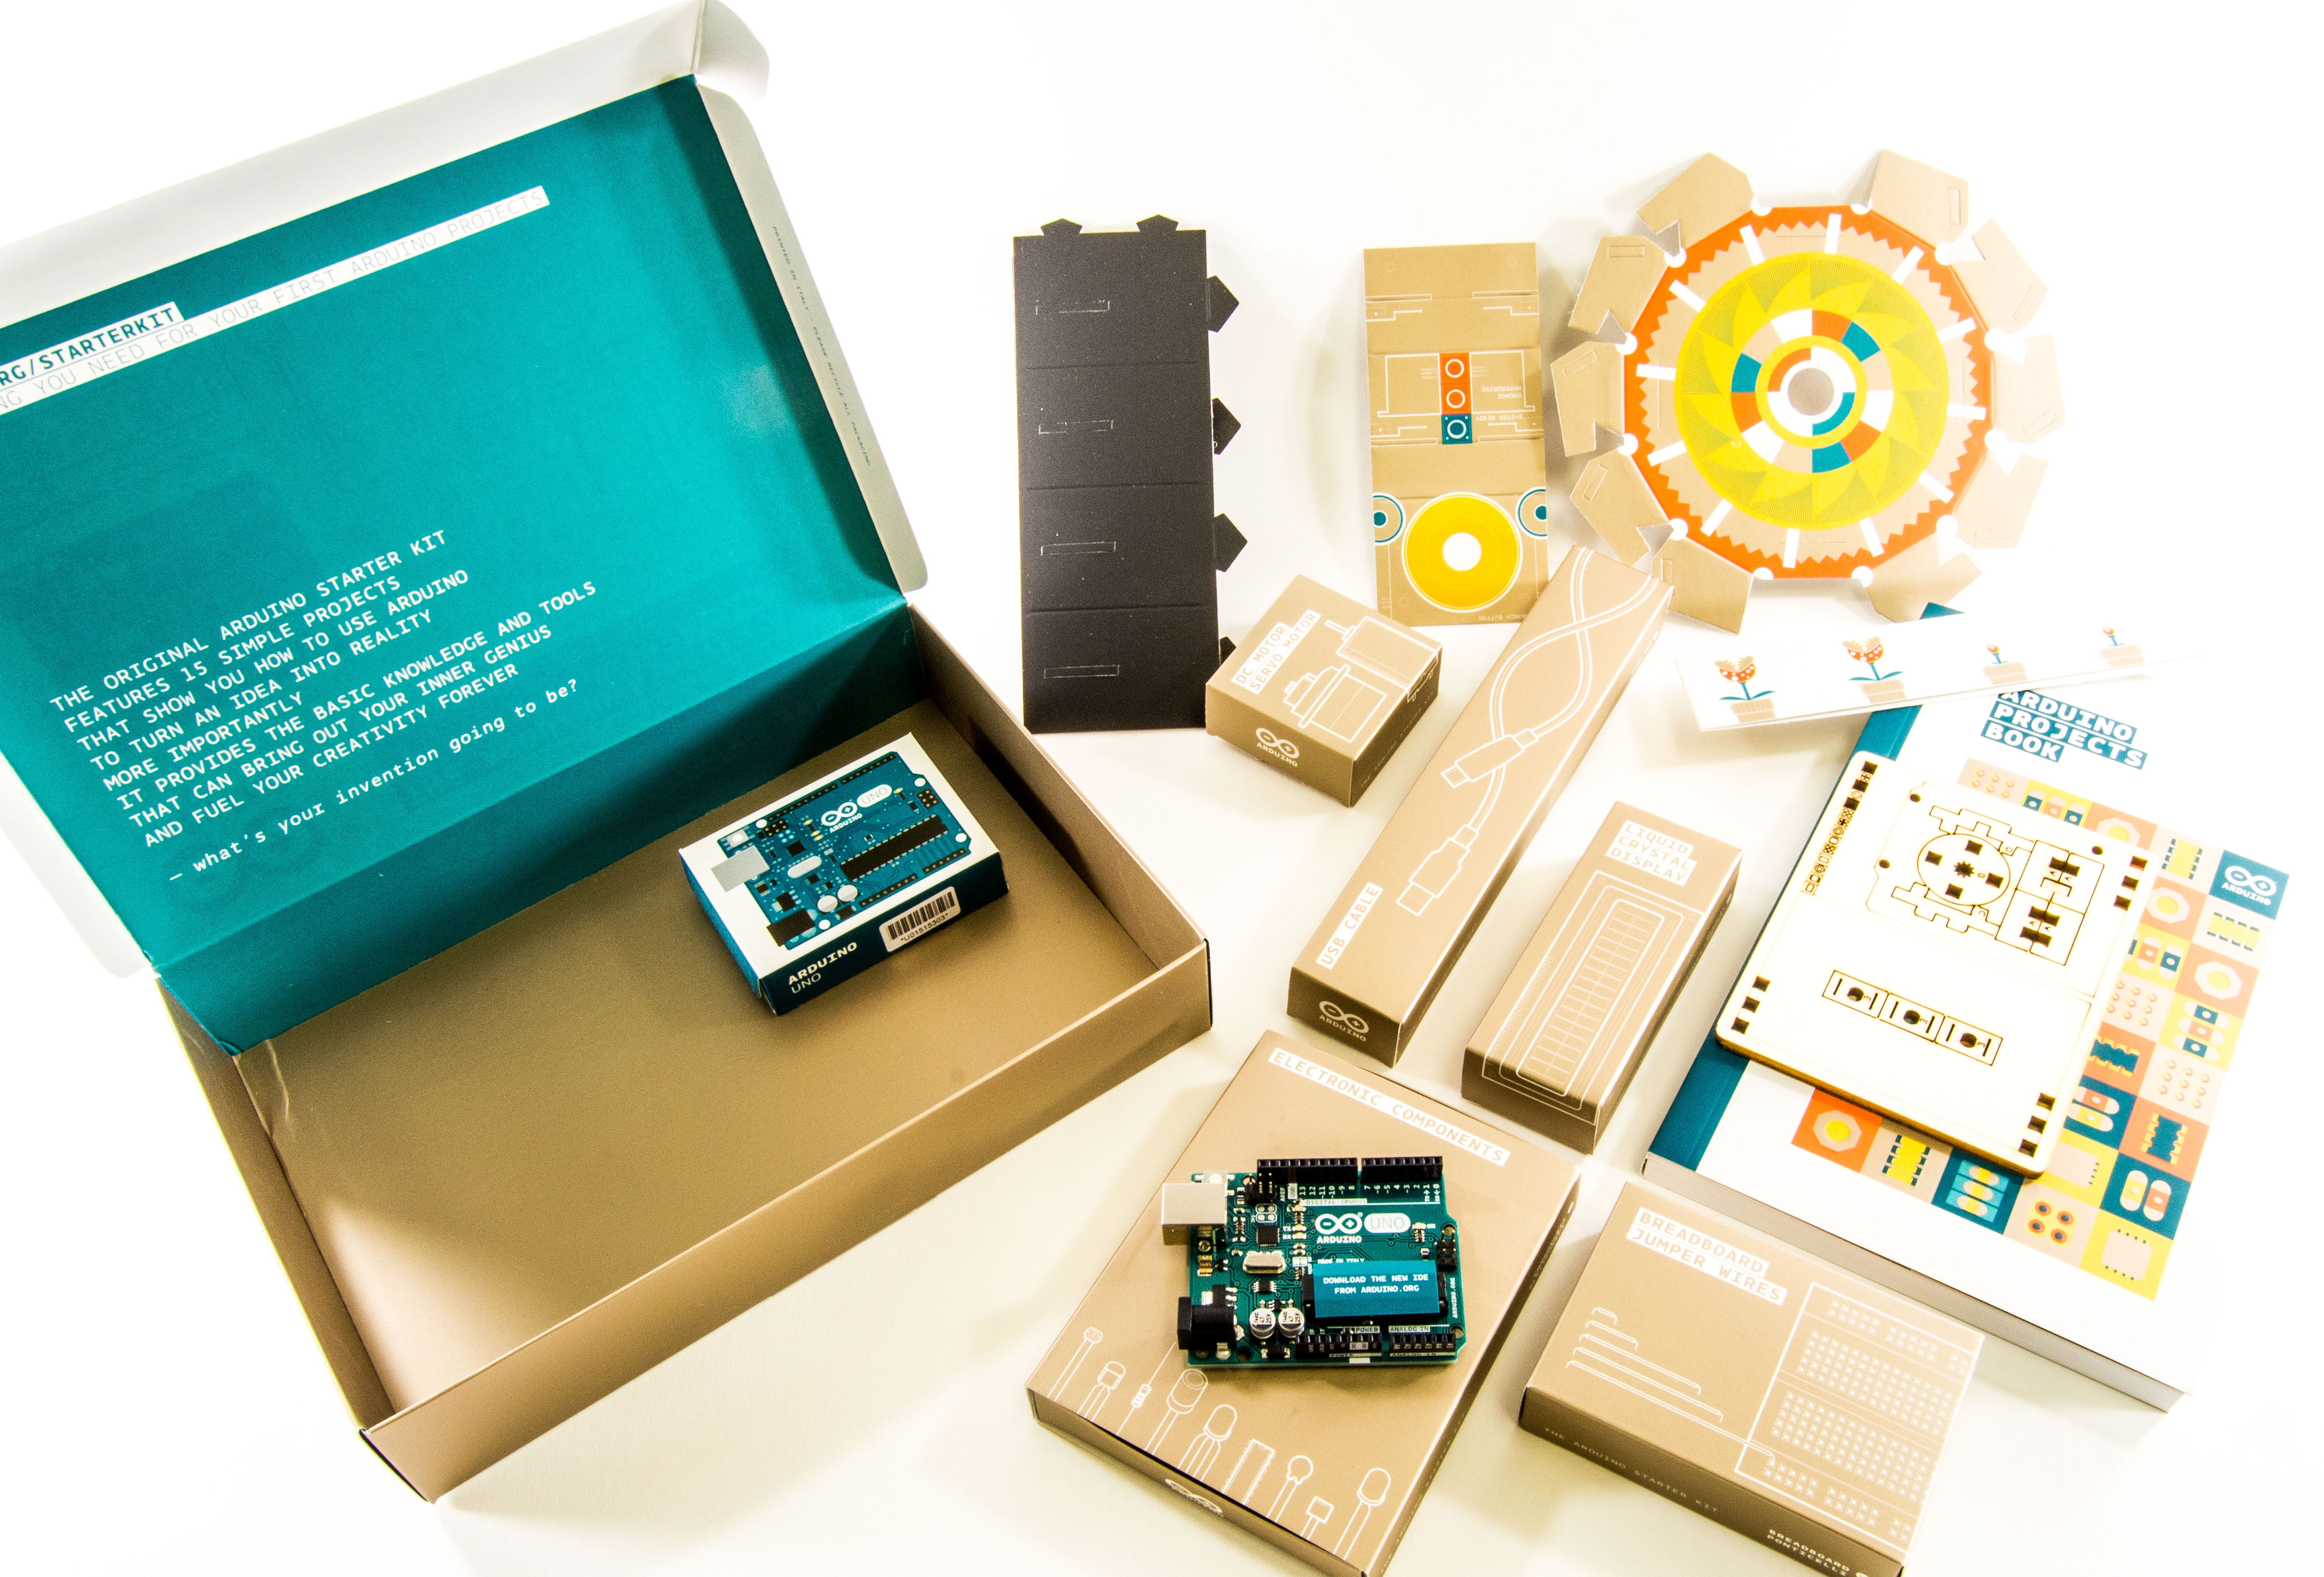 K000007 - Arduino - Starter Kit, Arduino UNO, Projects Book